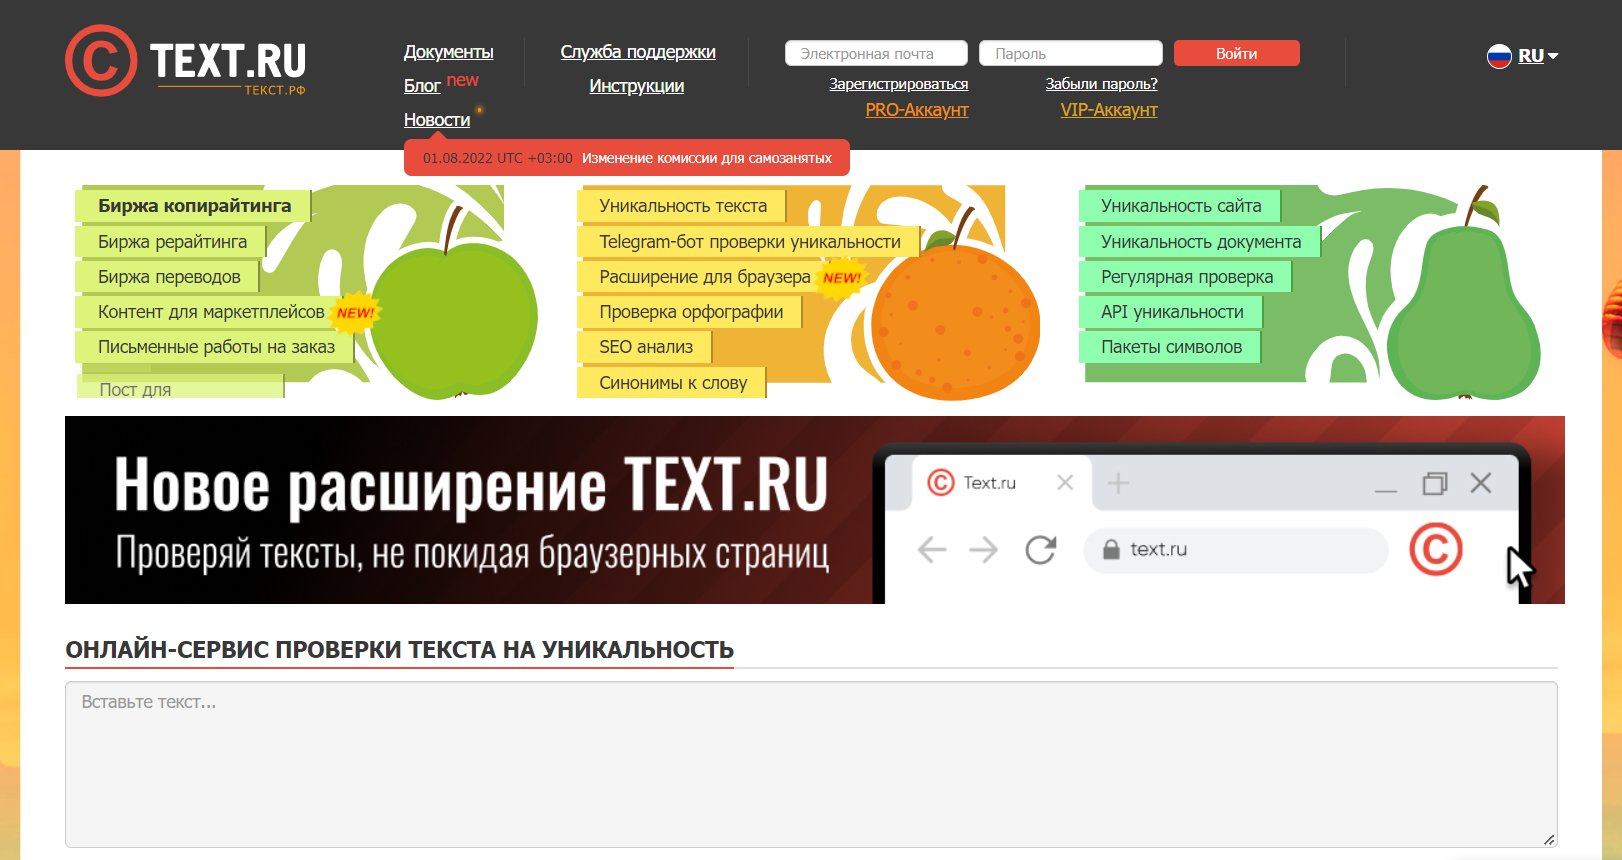 Текст.ру официальный сайт онлайн-сервиса